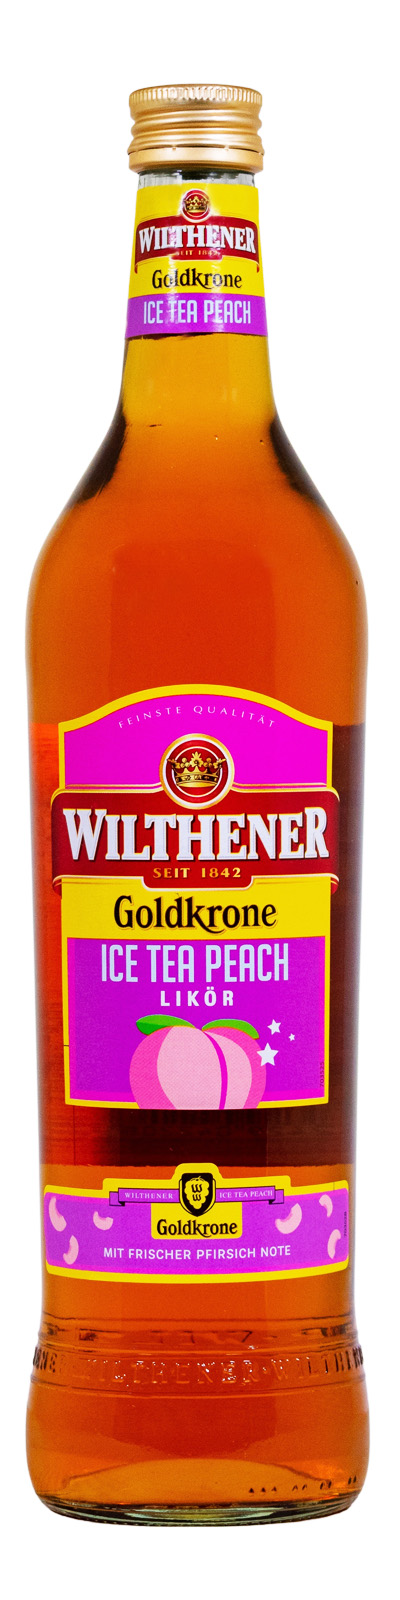 Wilthener Goldkrone Ice Tea Peach Likör - 0,7L 22% vol